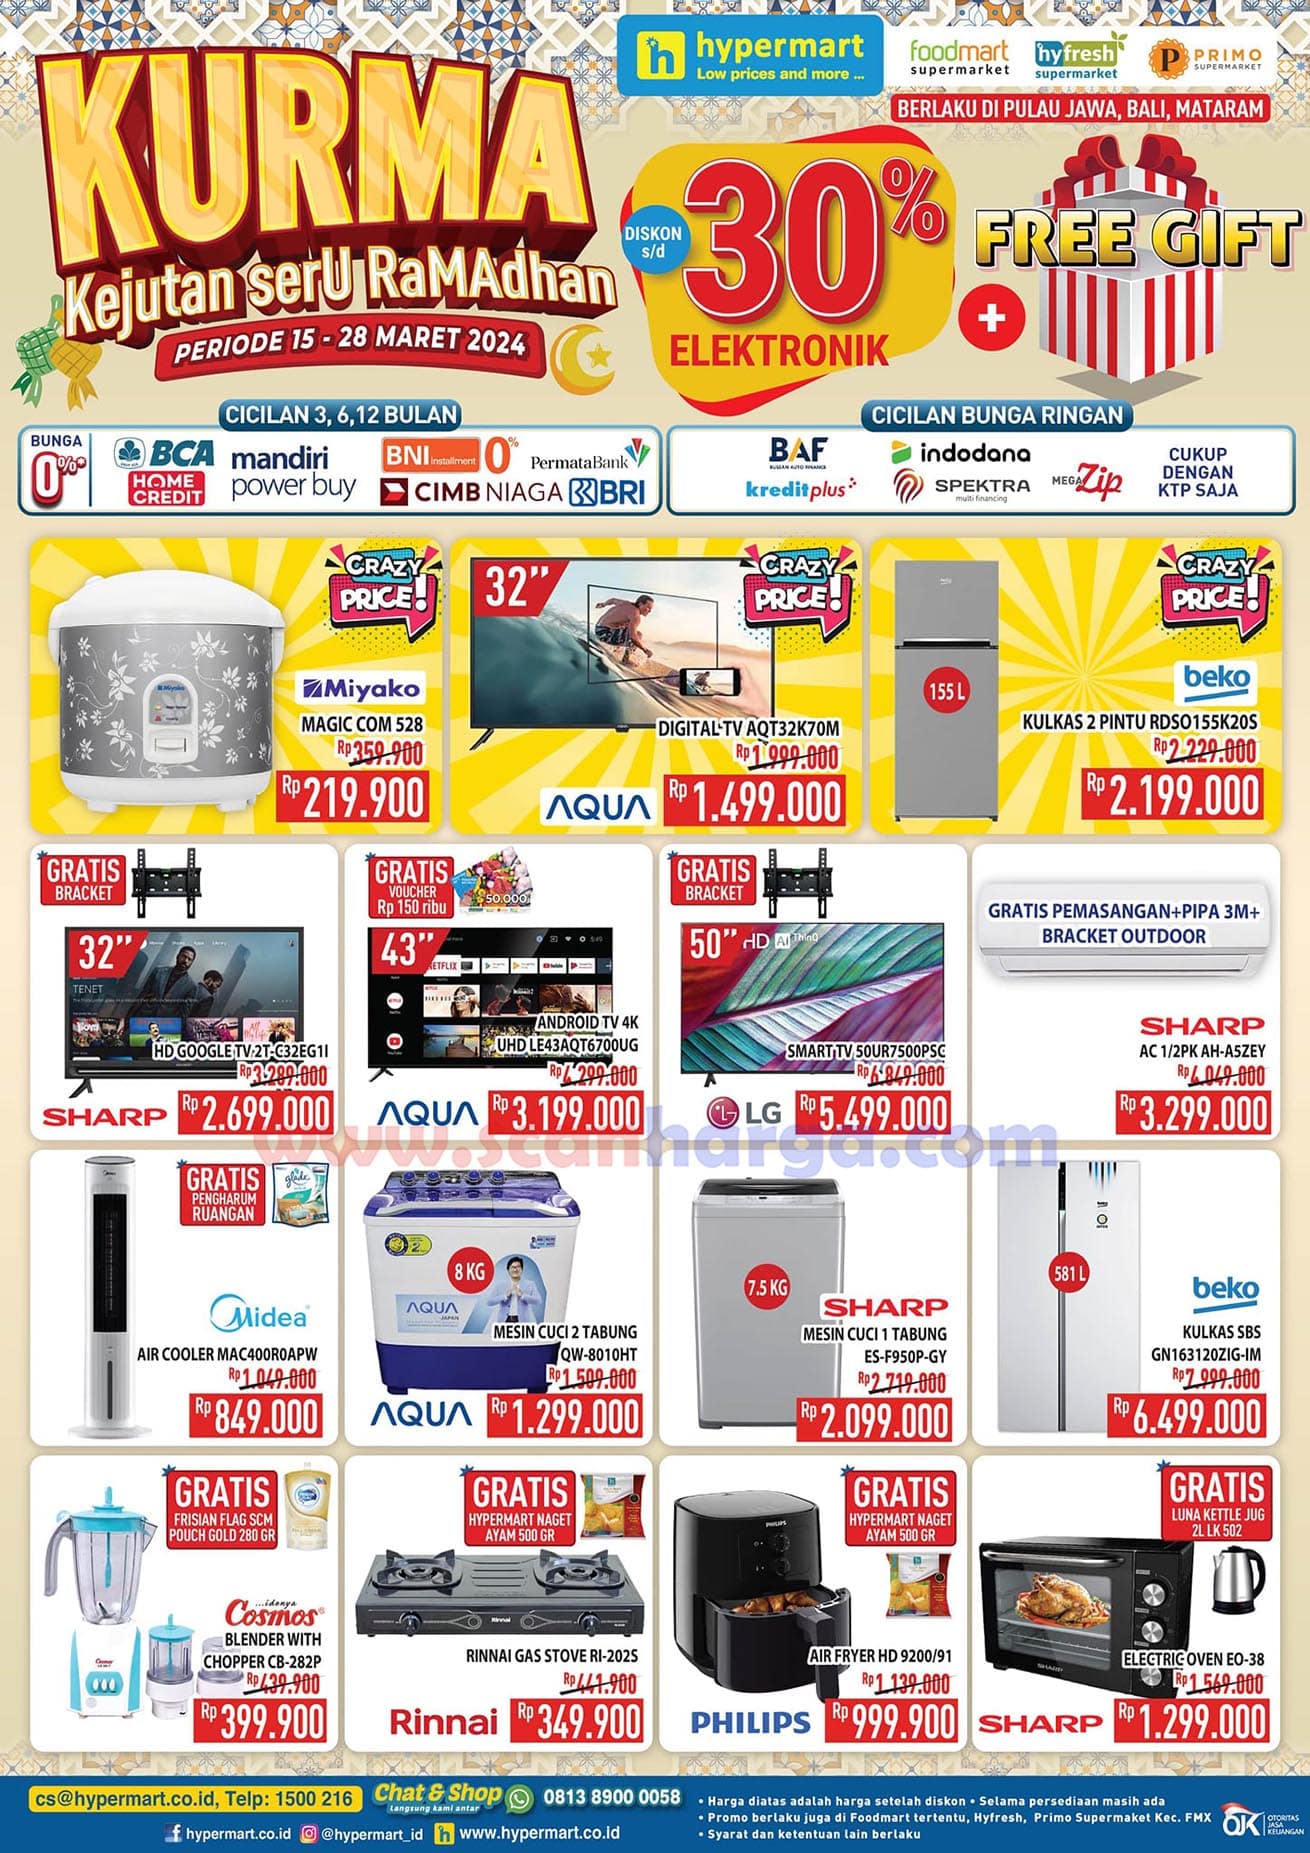 Katalog Promo Hypermart Weekend Terbaru 15 - 18 Maret 2024 4